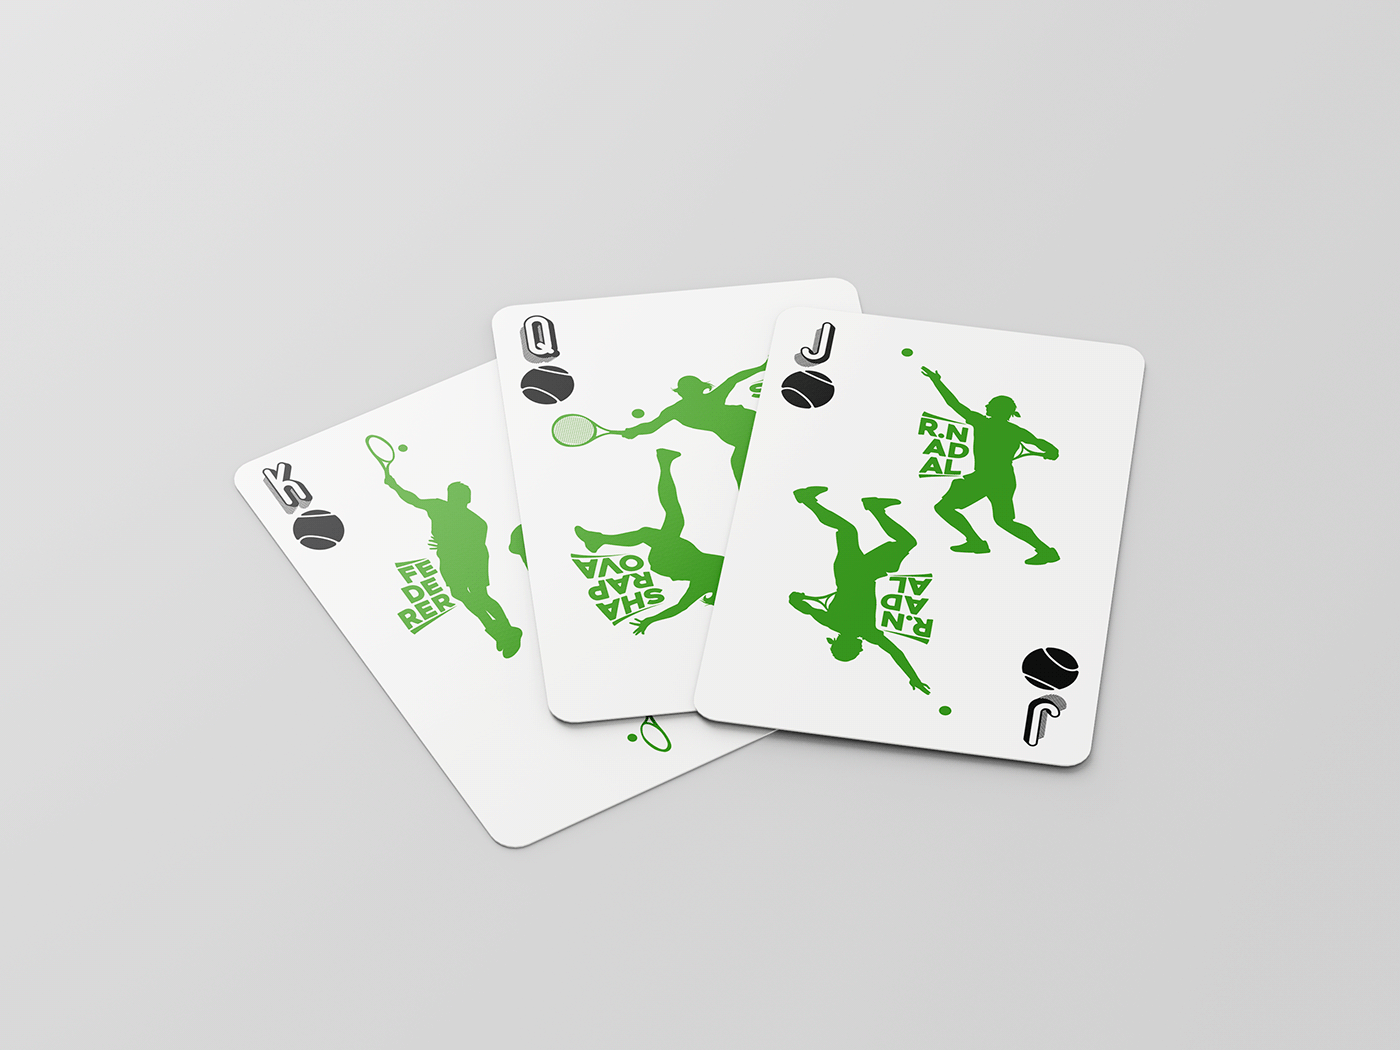 basketball card cards Games iskambil kart Oyun spor sports tennis